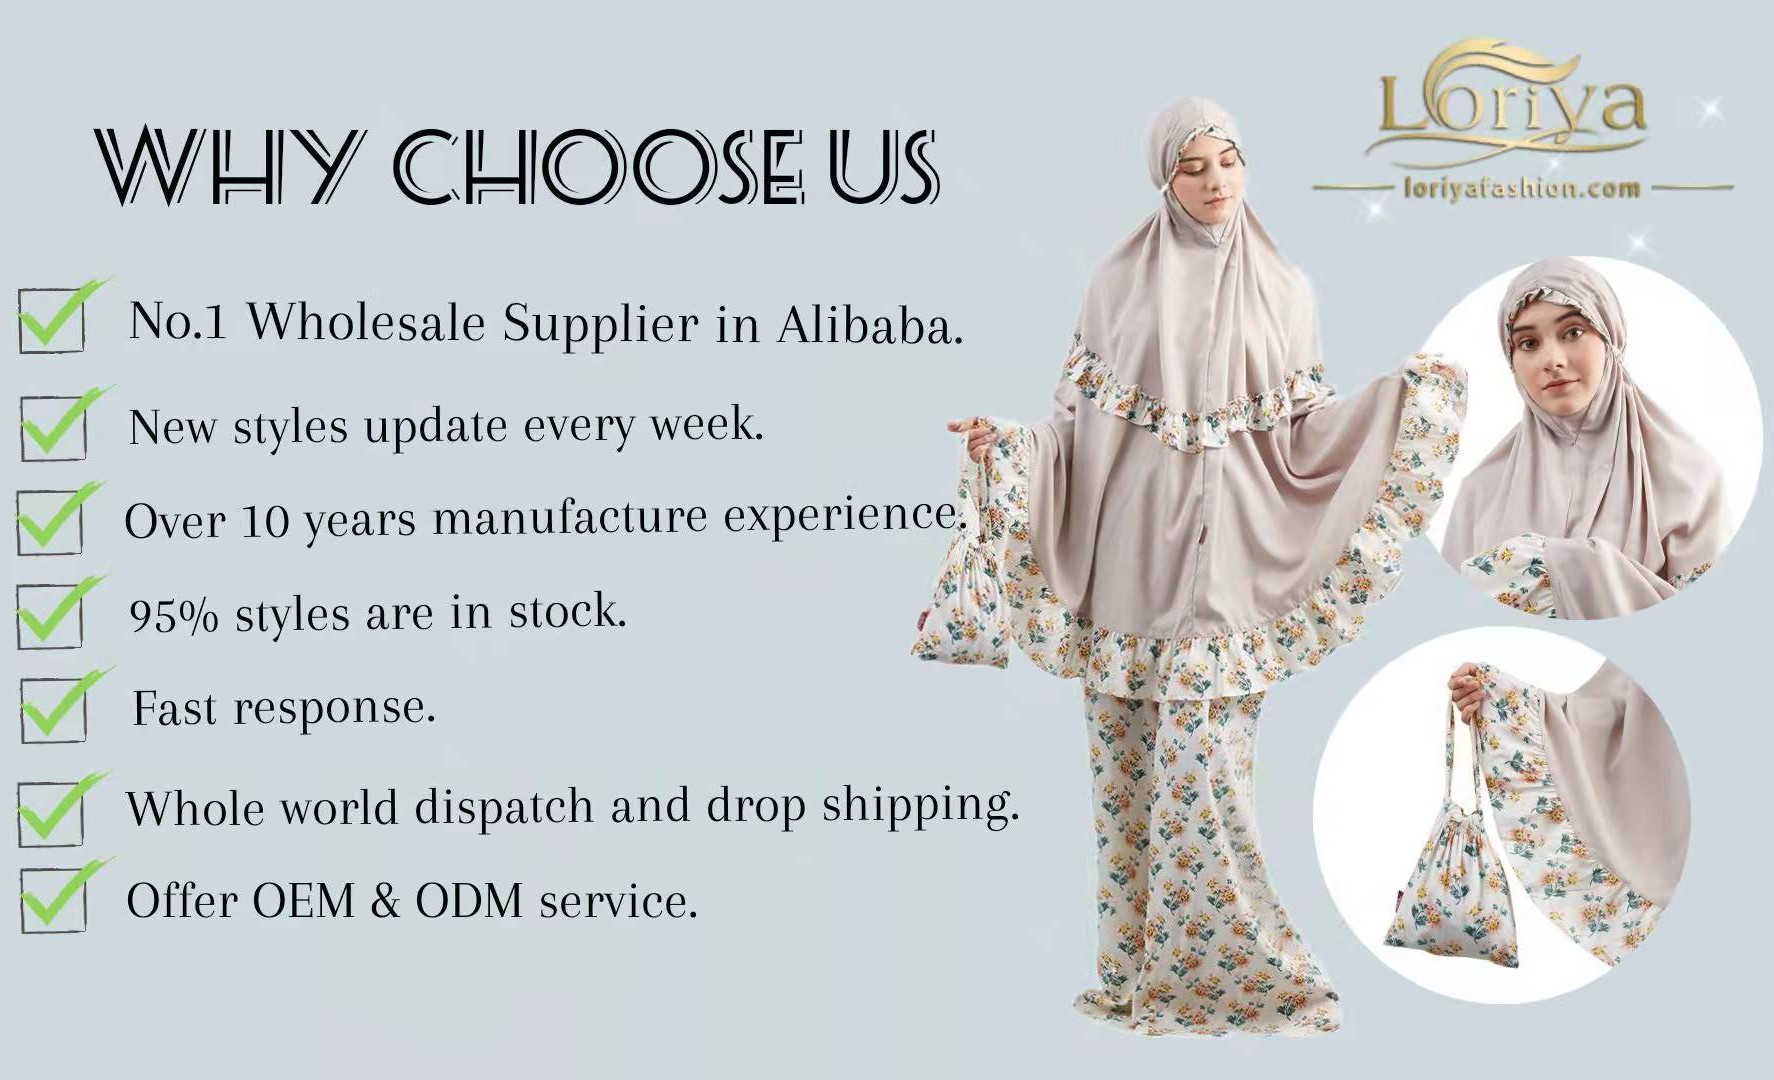 Muslim One piece prayer abaya for EID Jilbab prayer abaya Dubai Pakistan Islamic clothing 2022